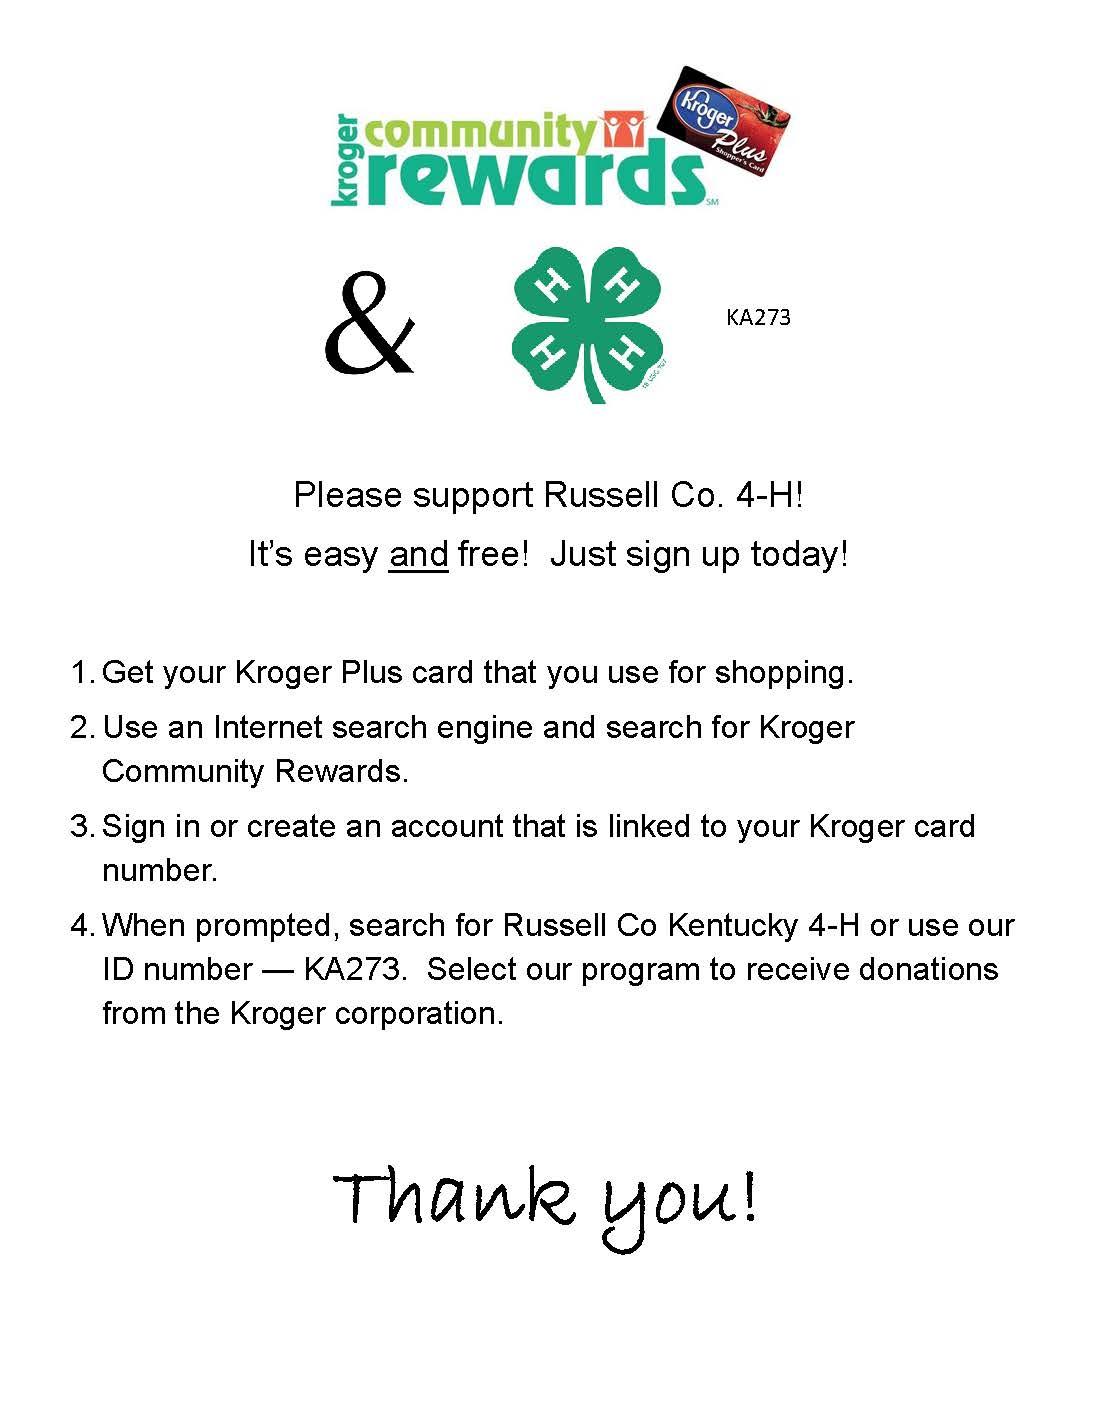 Support RC 4-H with Kroger Community Rewards information